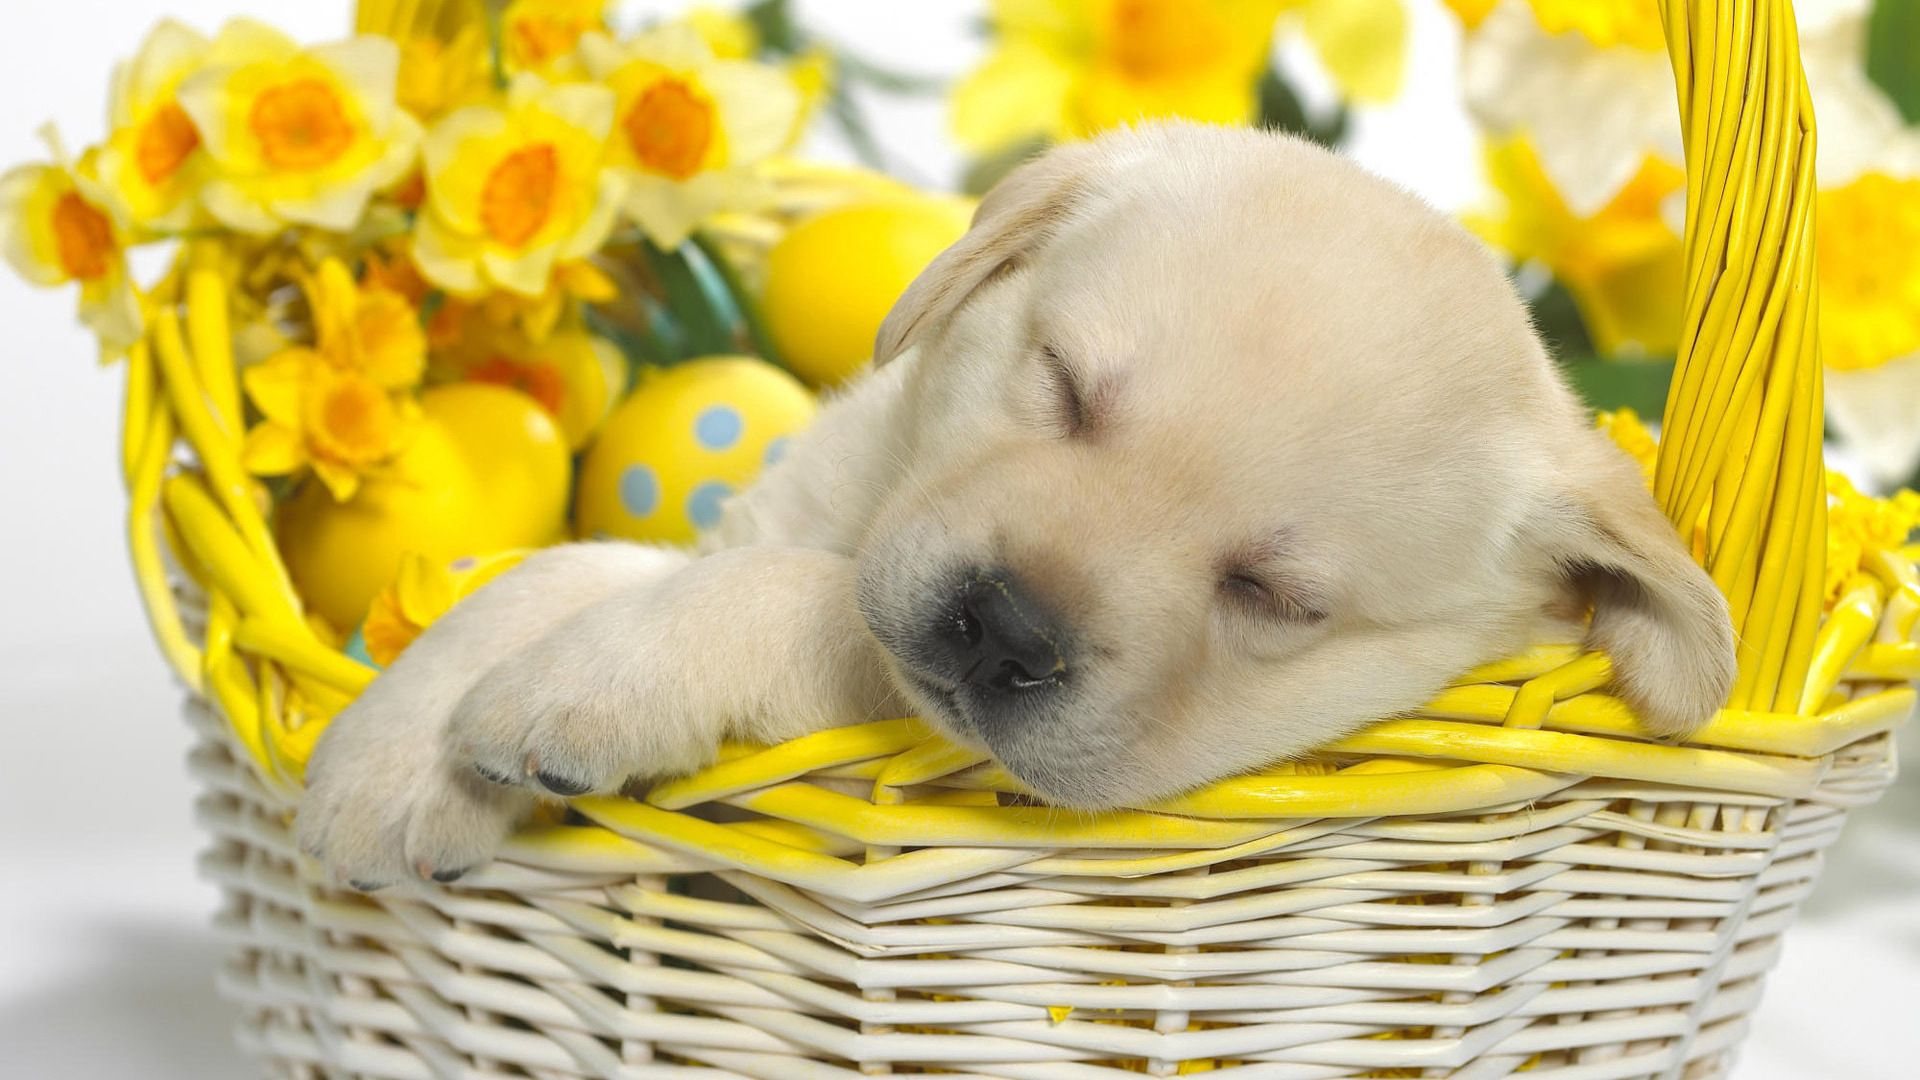 labrador, animals, flowers, eggs, easter, puppy, sleep, dream, basket wallpaper for mobile